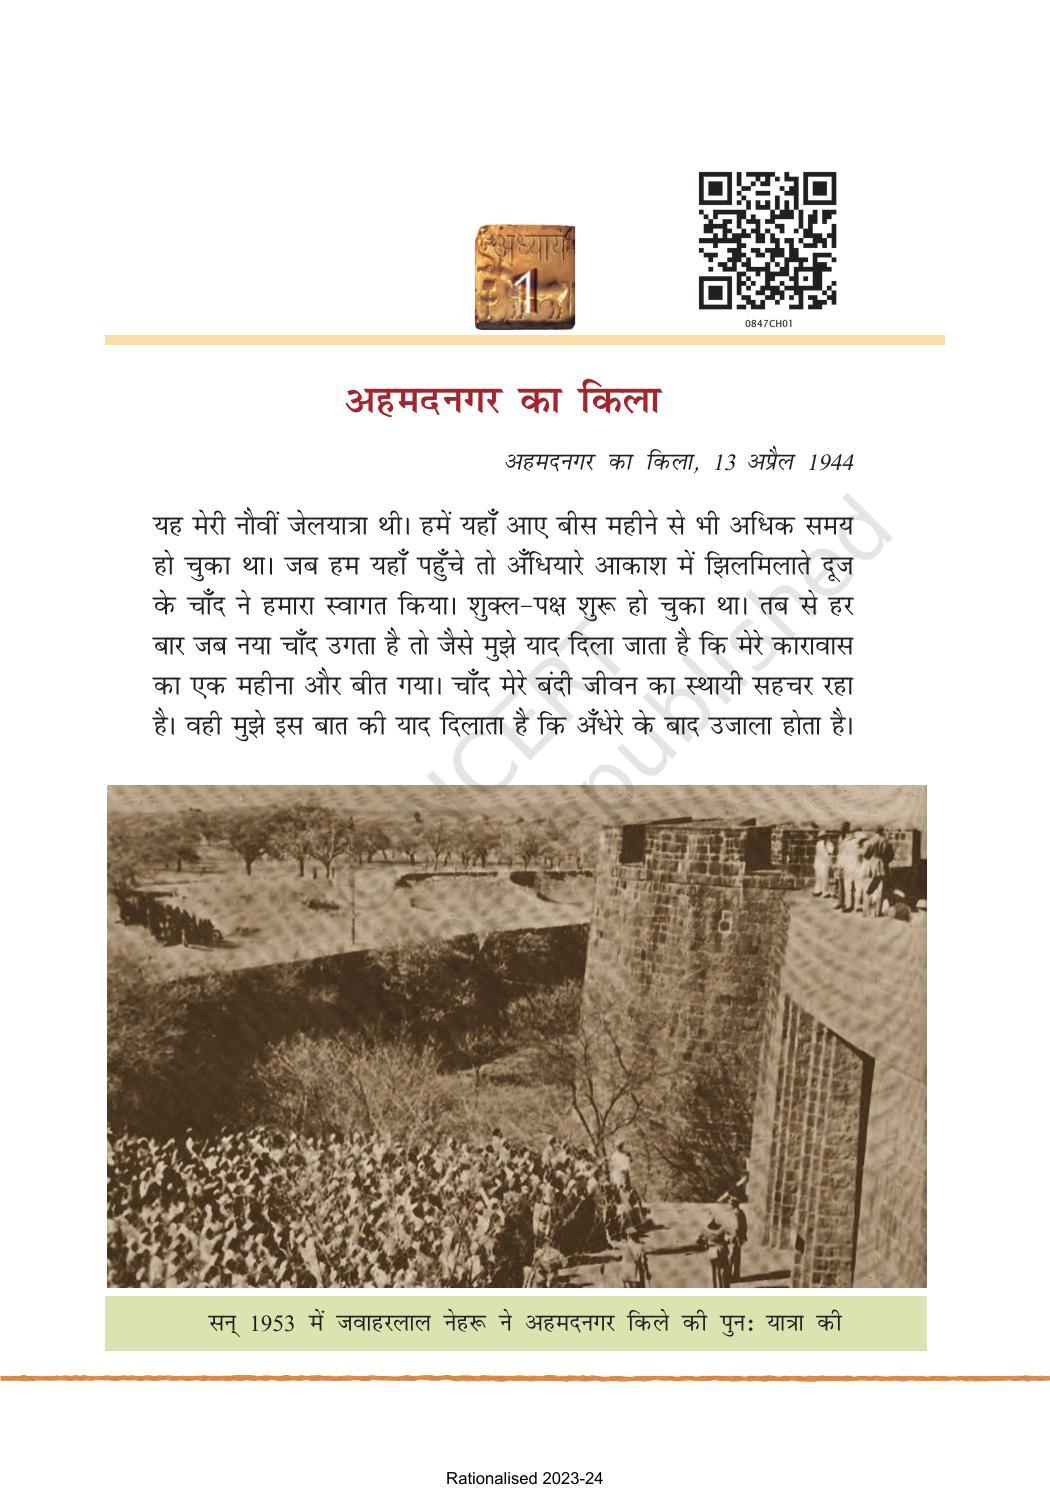 NCERT Book for Class 8 Hindi Bharat Ki Khoj Chapter 1 अहमदनगर का किला - Page 1